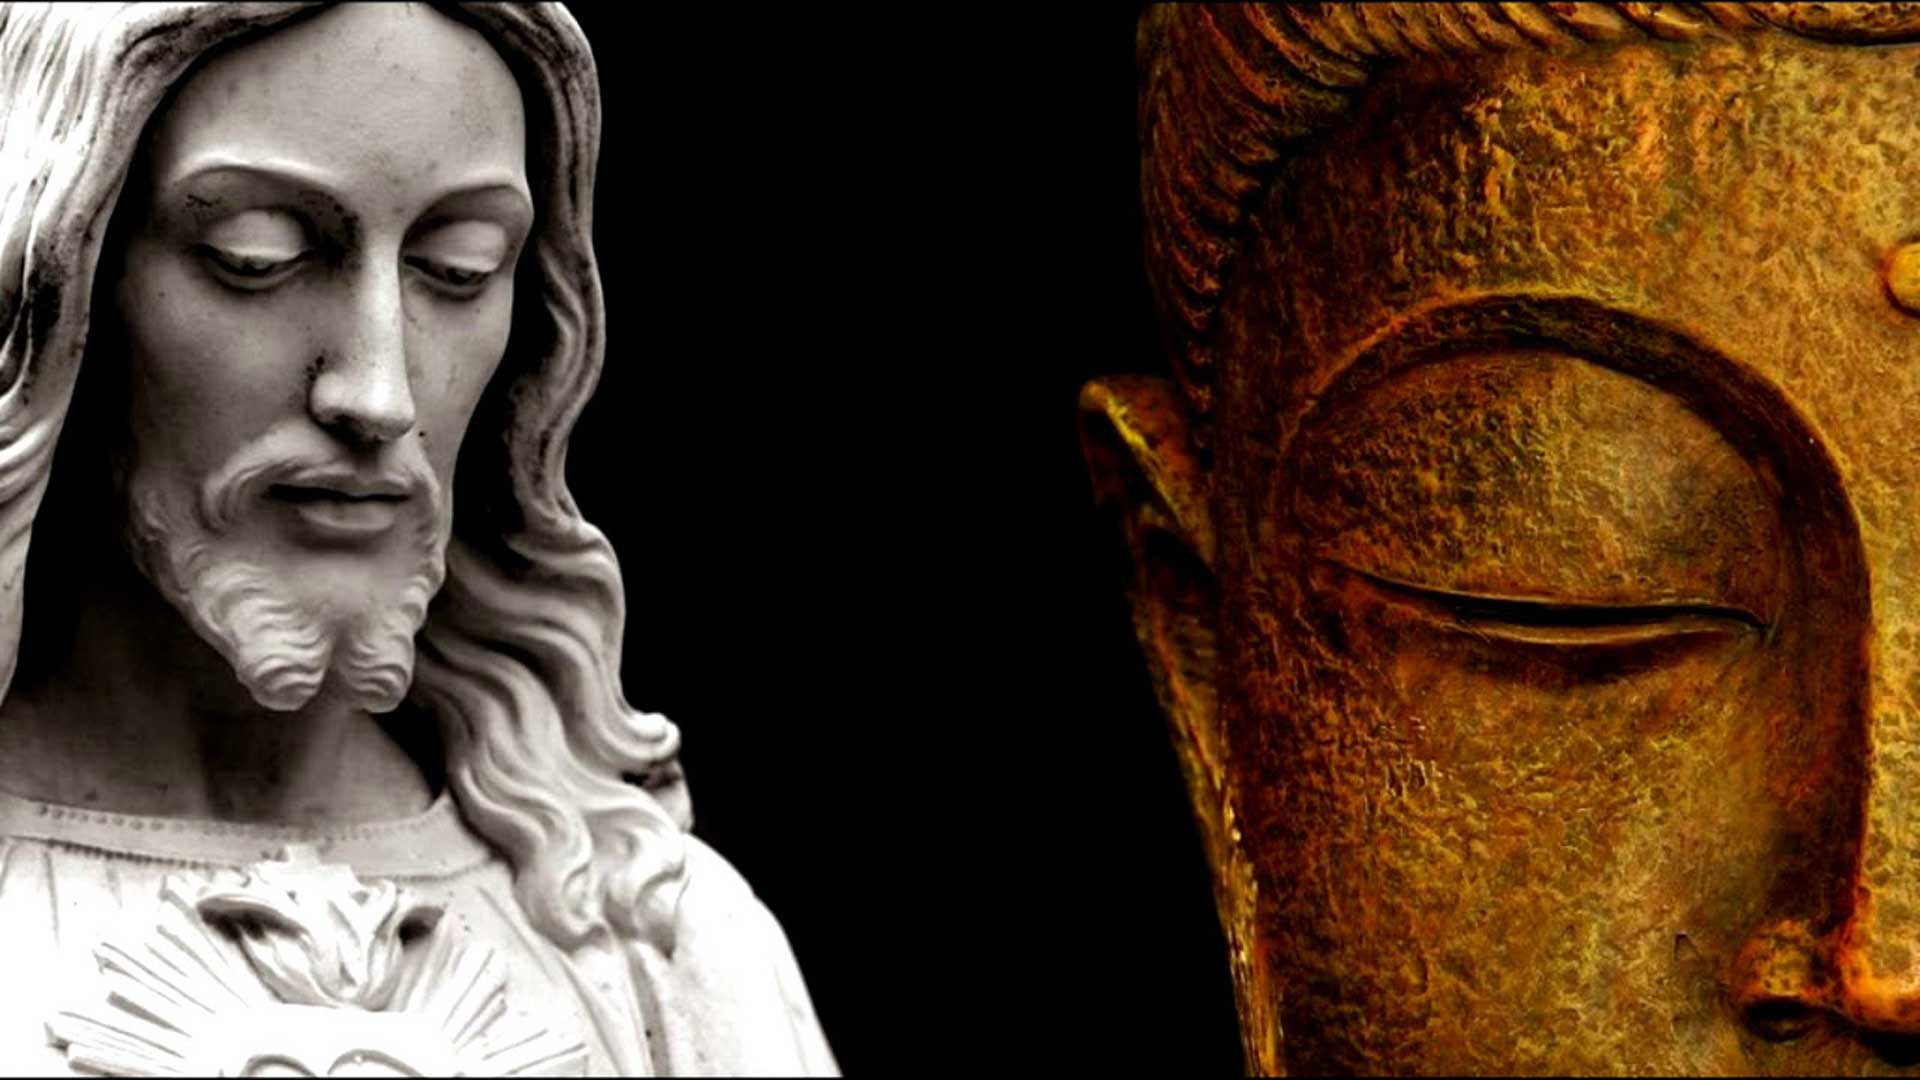 Un documental de la BBC sugiere que Jesús fue un monje budista